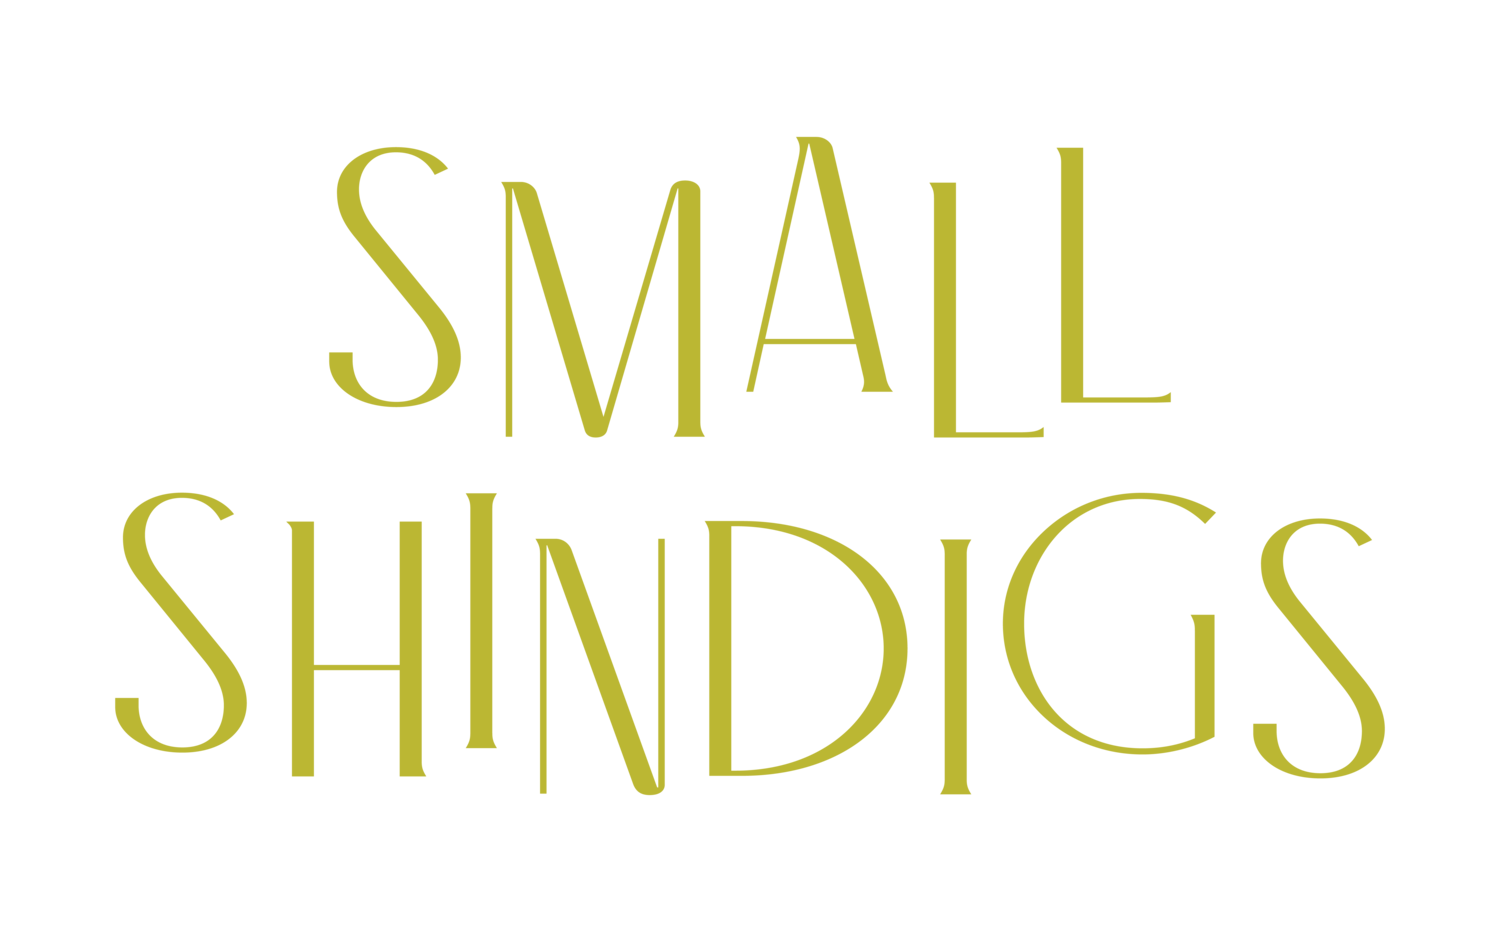 Small Shindigs